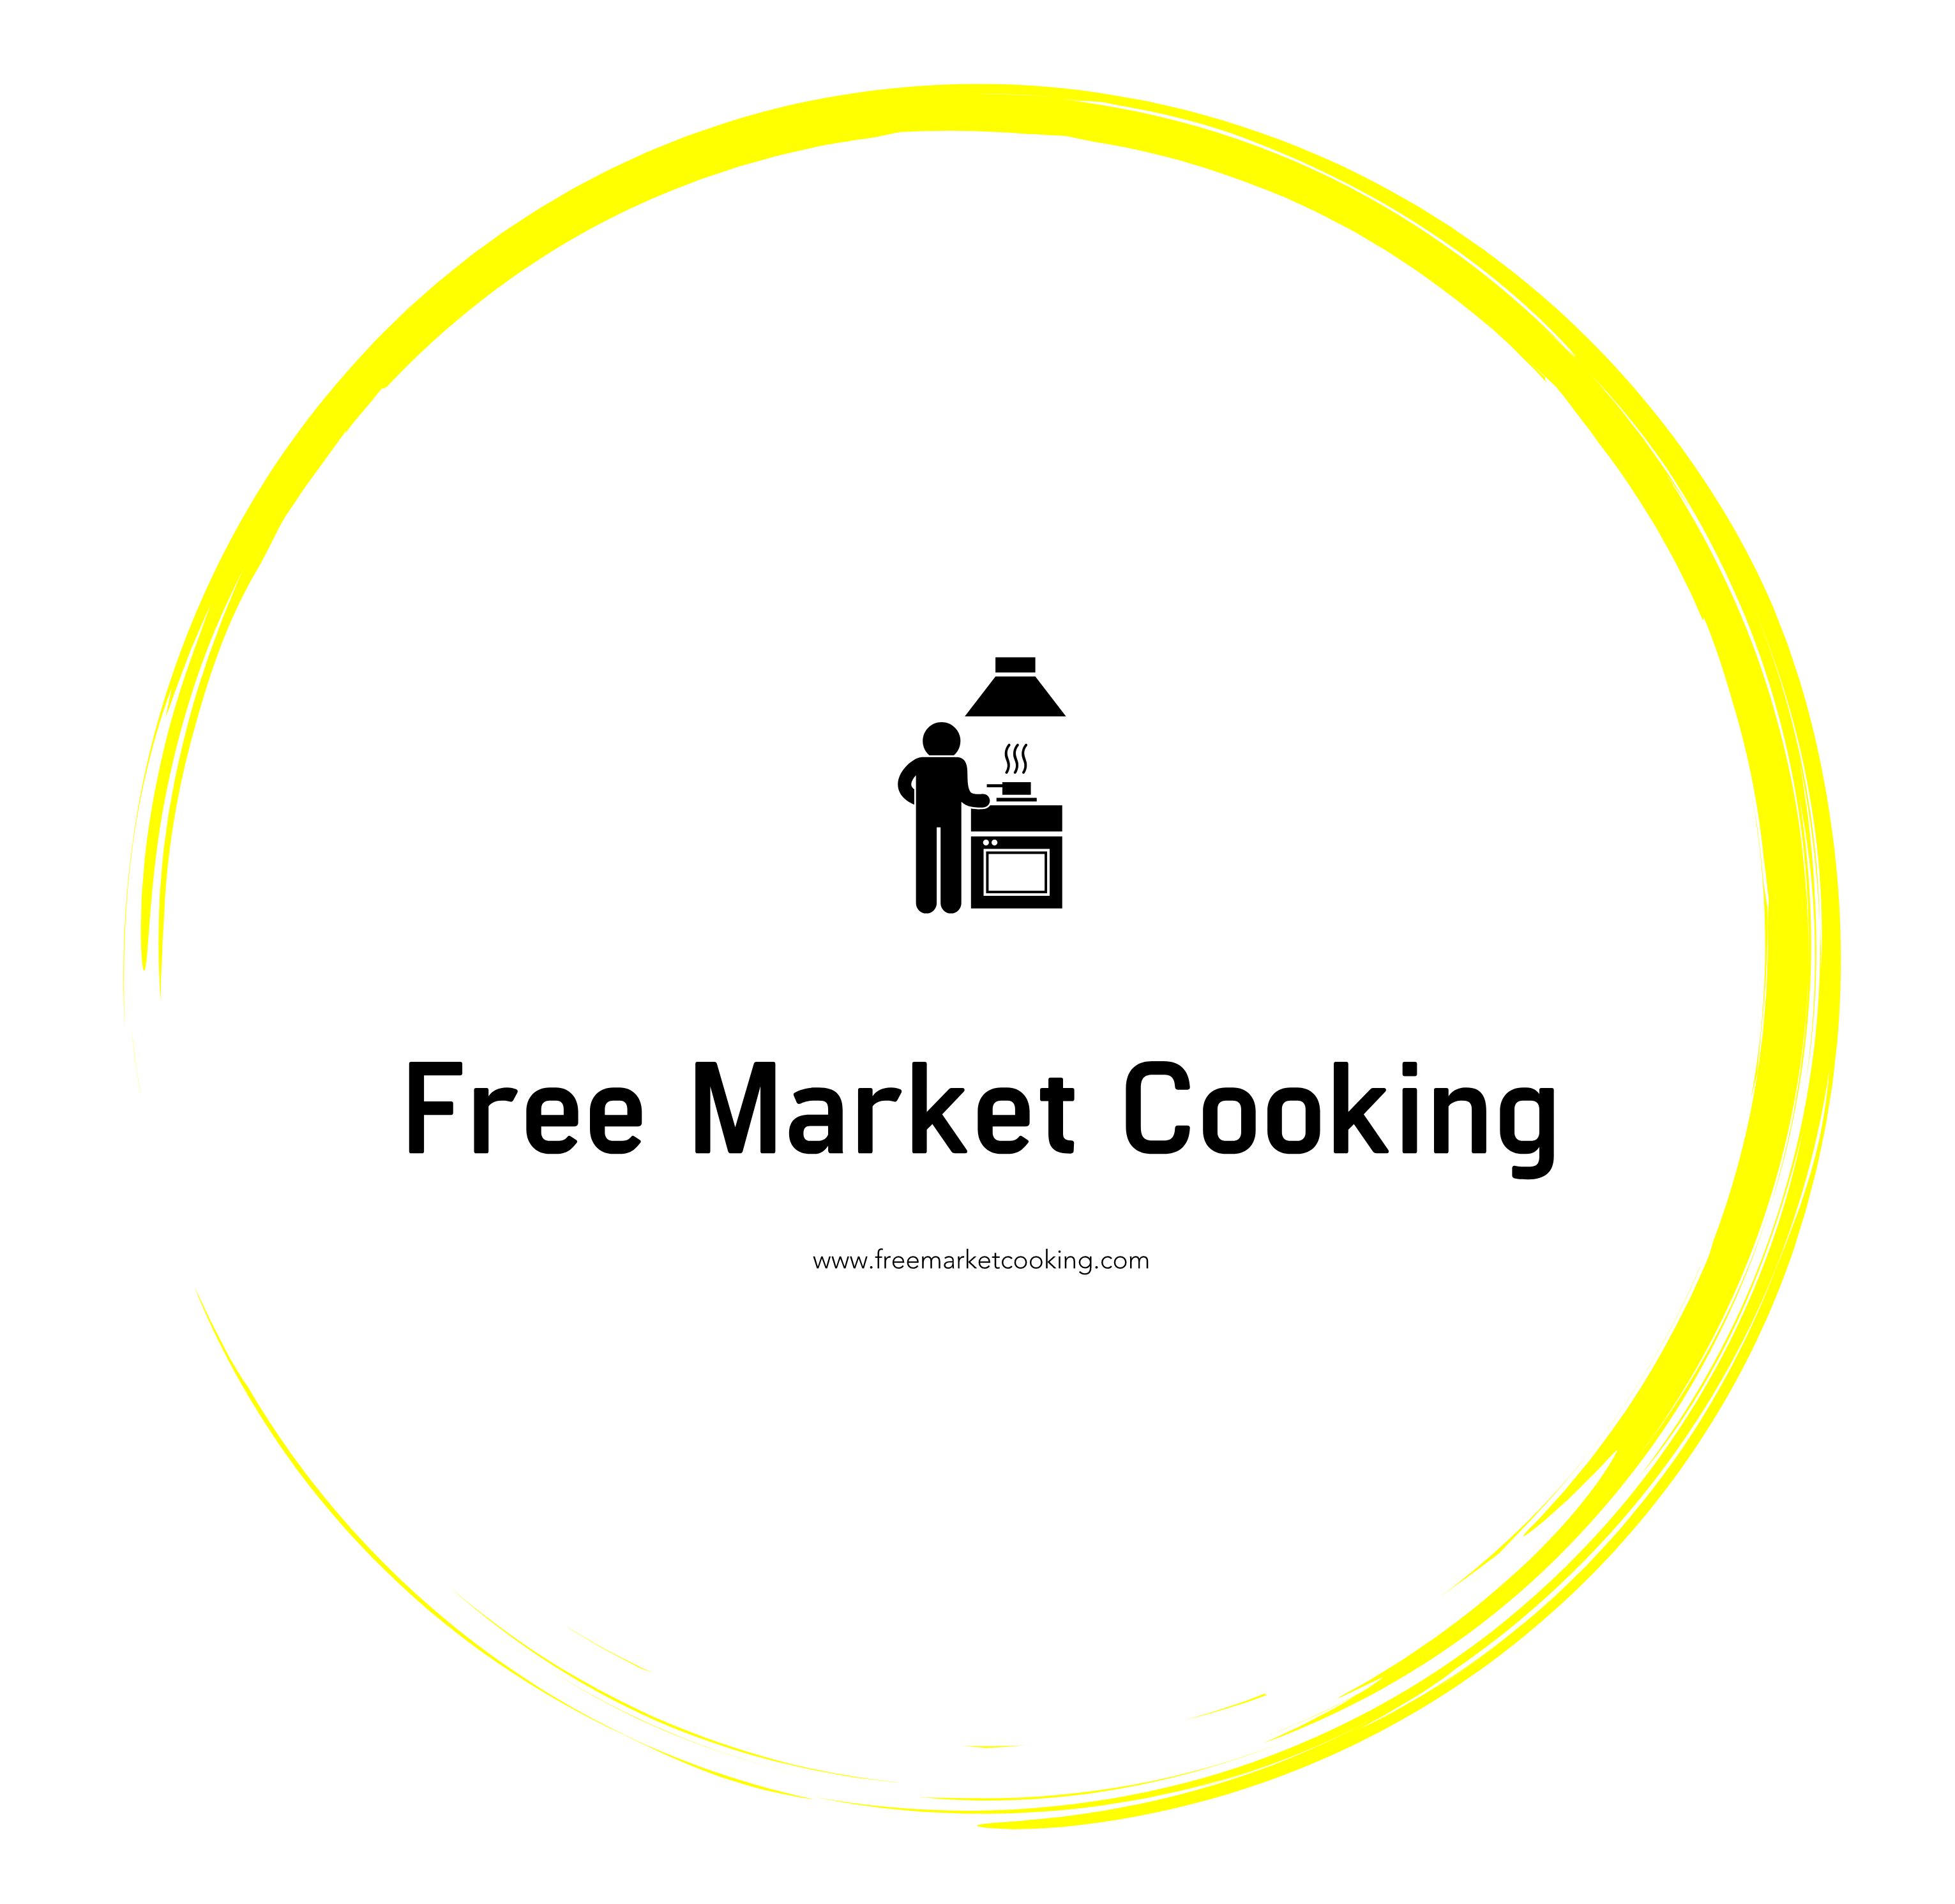 Cooking.com Logo - Free Market Cooking Free Market Cooking